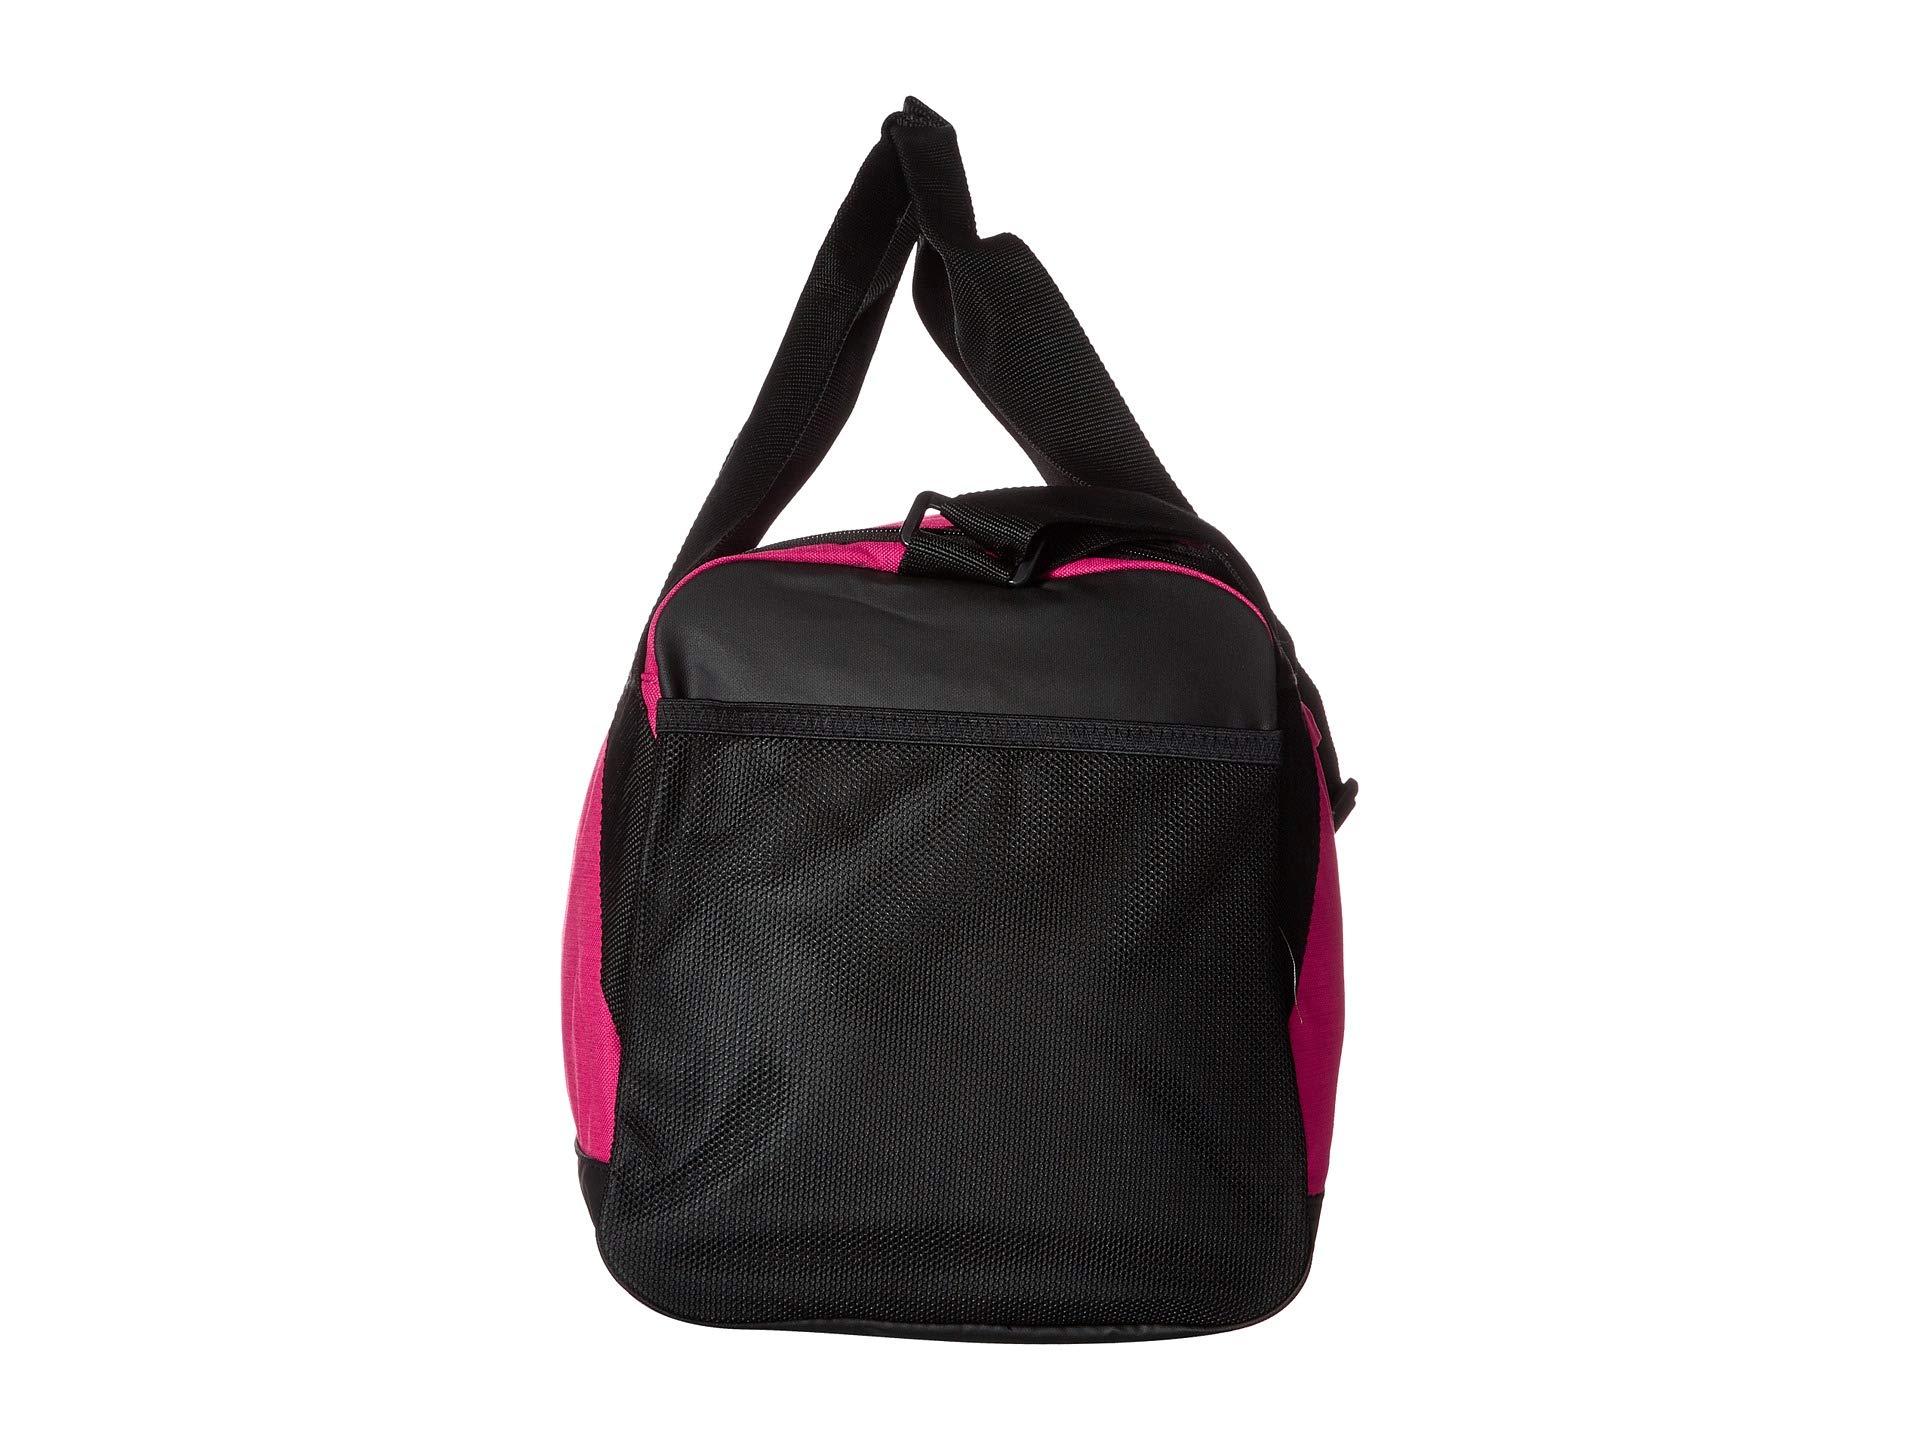 Lyst - Nike Brasilia Small Training Duffel Bag (green Abyss/black/white) Duffel Bags in Pink for Men